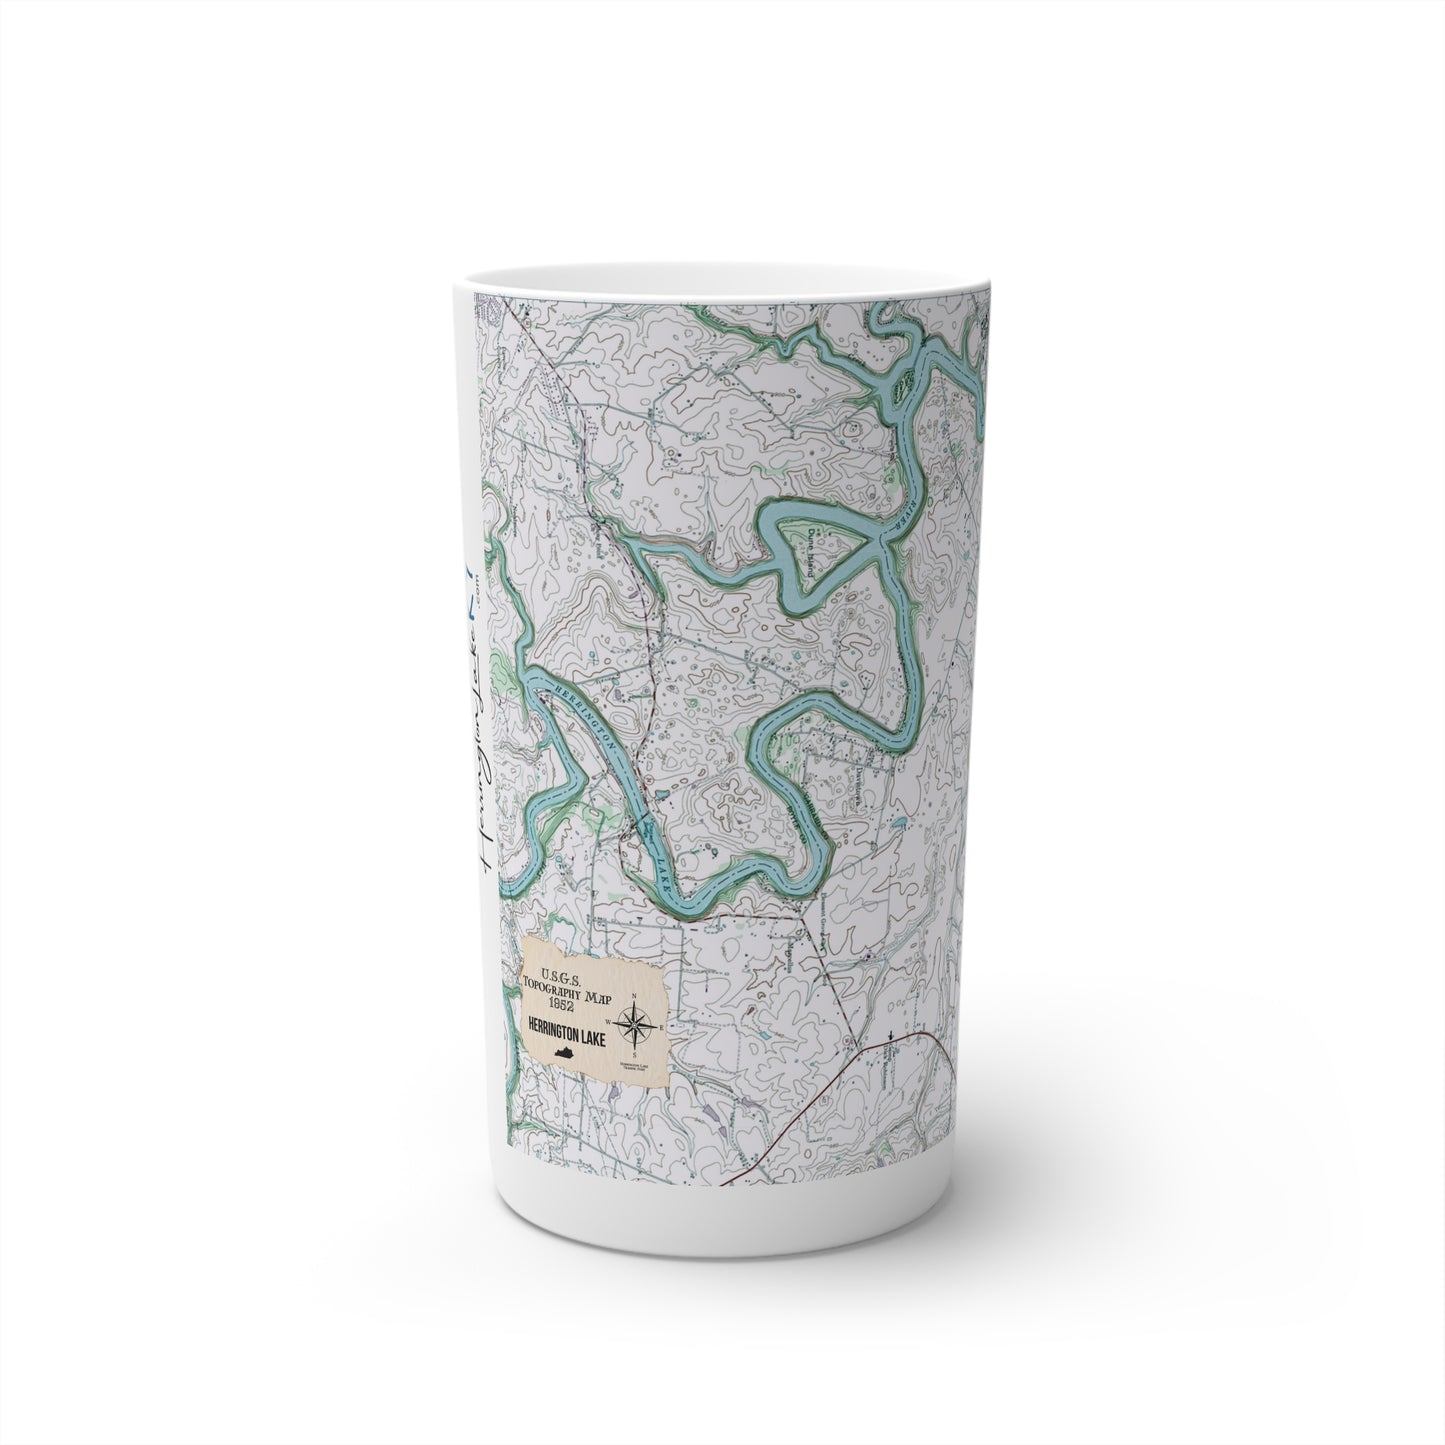 Herrington Lake 1952 USGS Topography Map Conical Coffee Mugs, 12oz (Blue/Green)